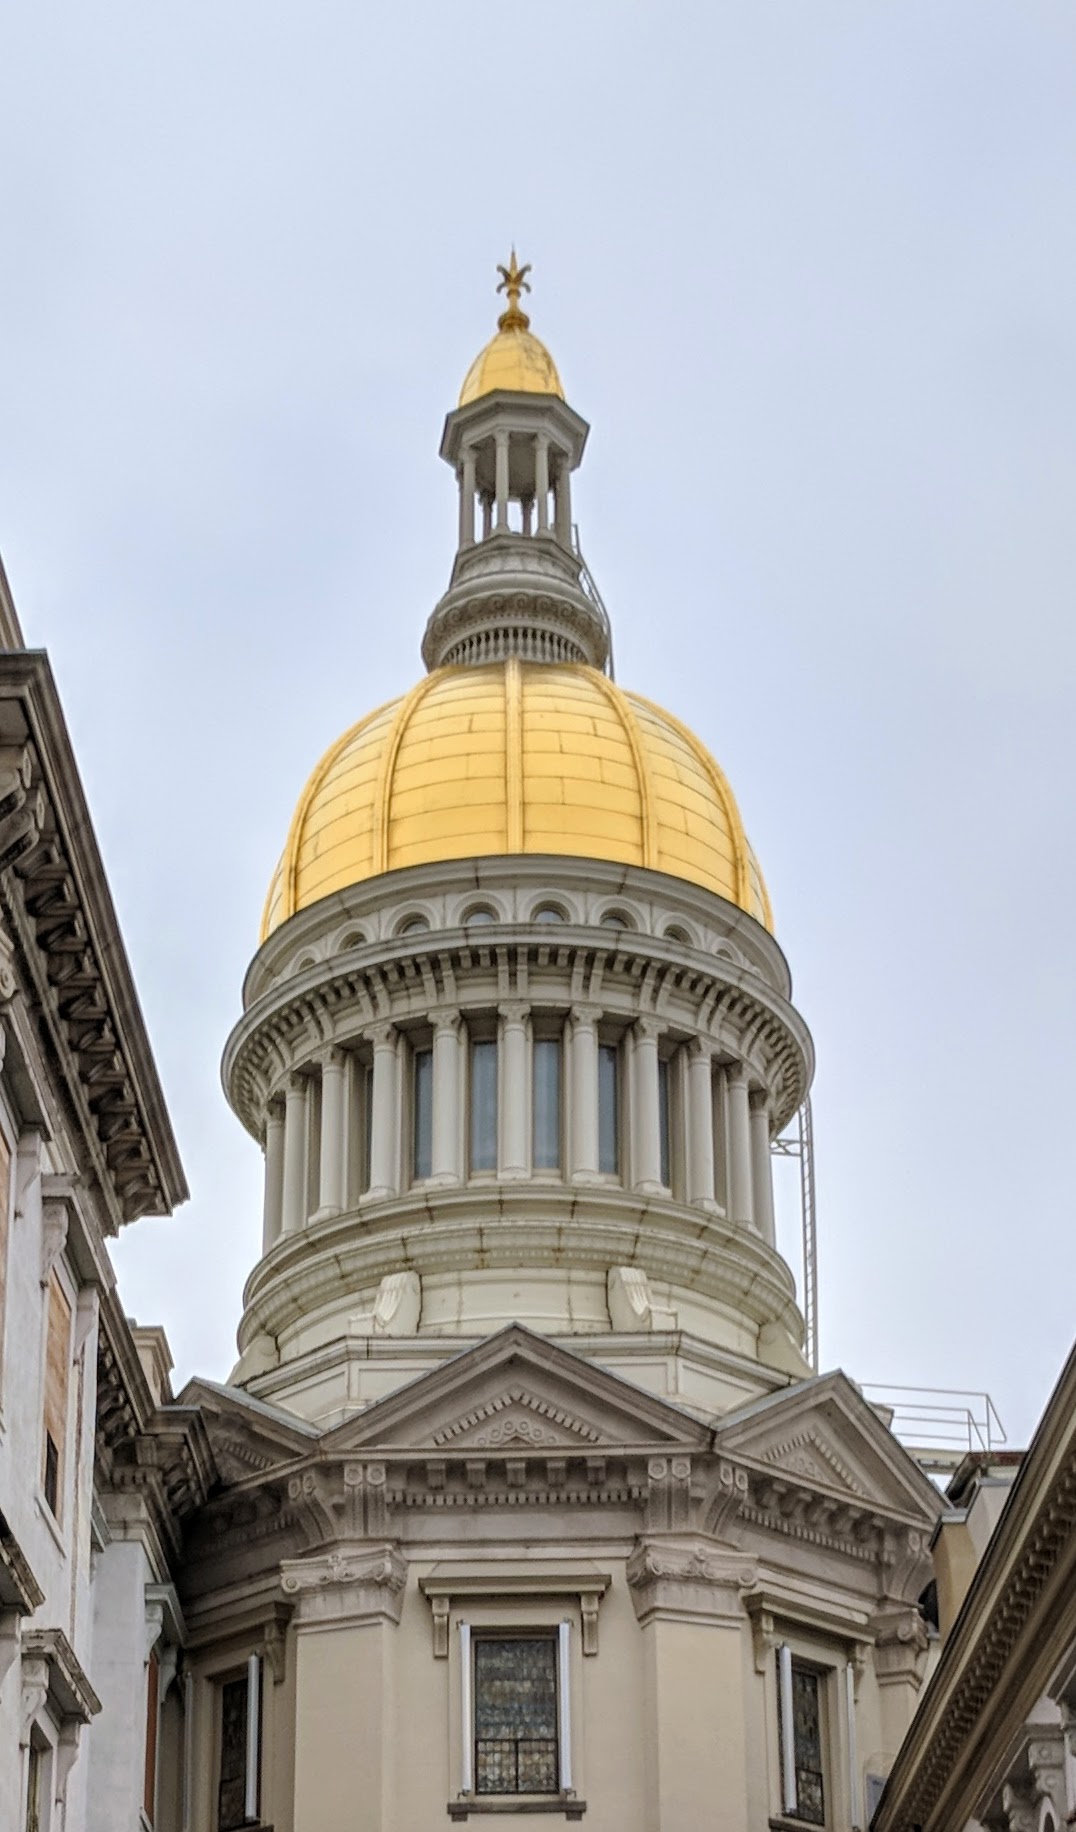 Gold dome on white stone statehouse